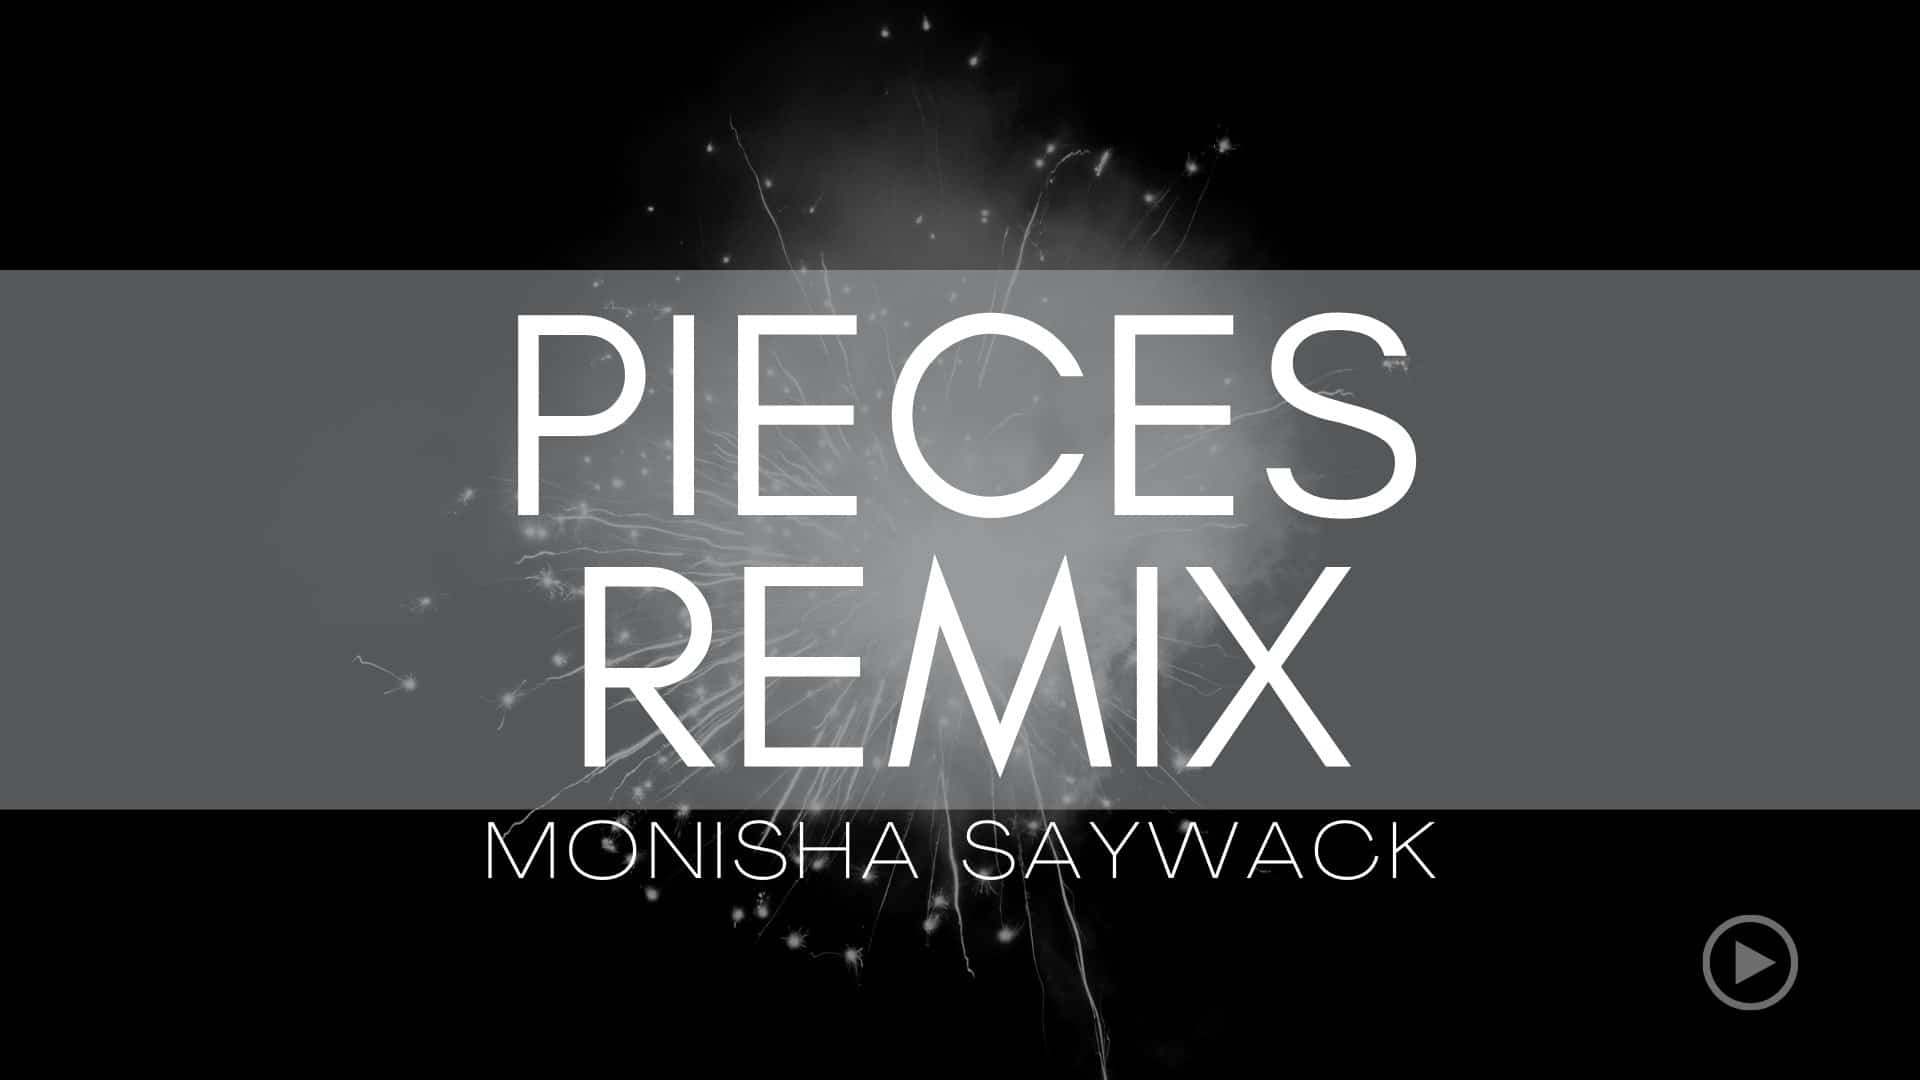 "Pieces Remix" - Turn Green by Monisha Saywack